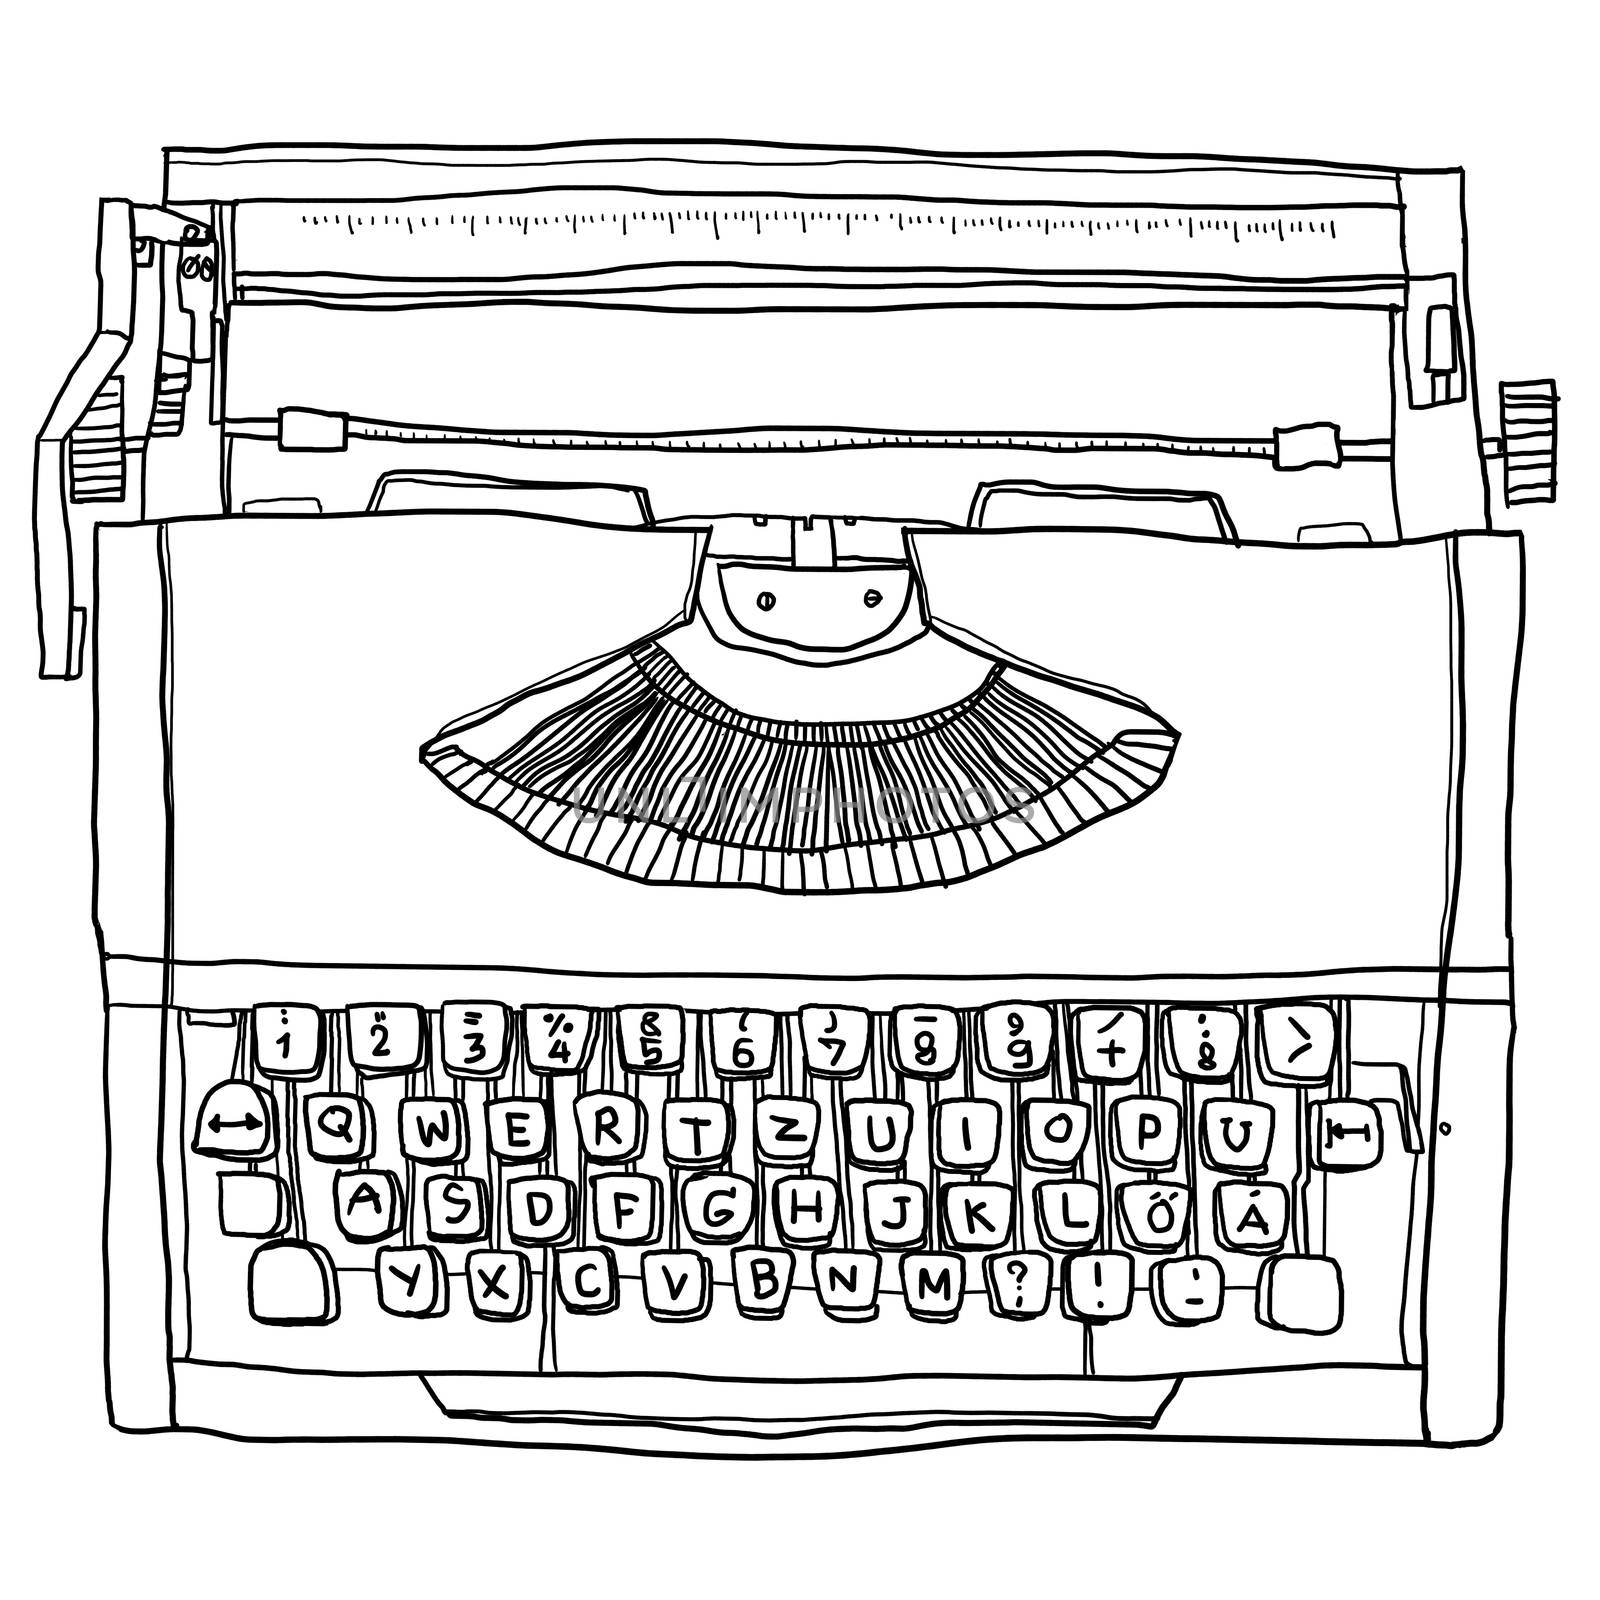 Orange Typewriter vintage  line art illustration